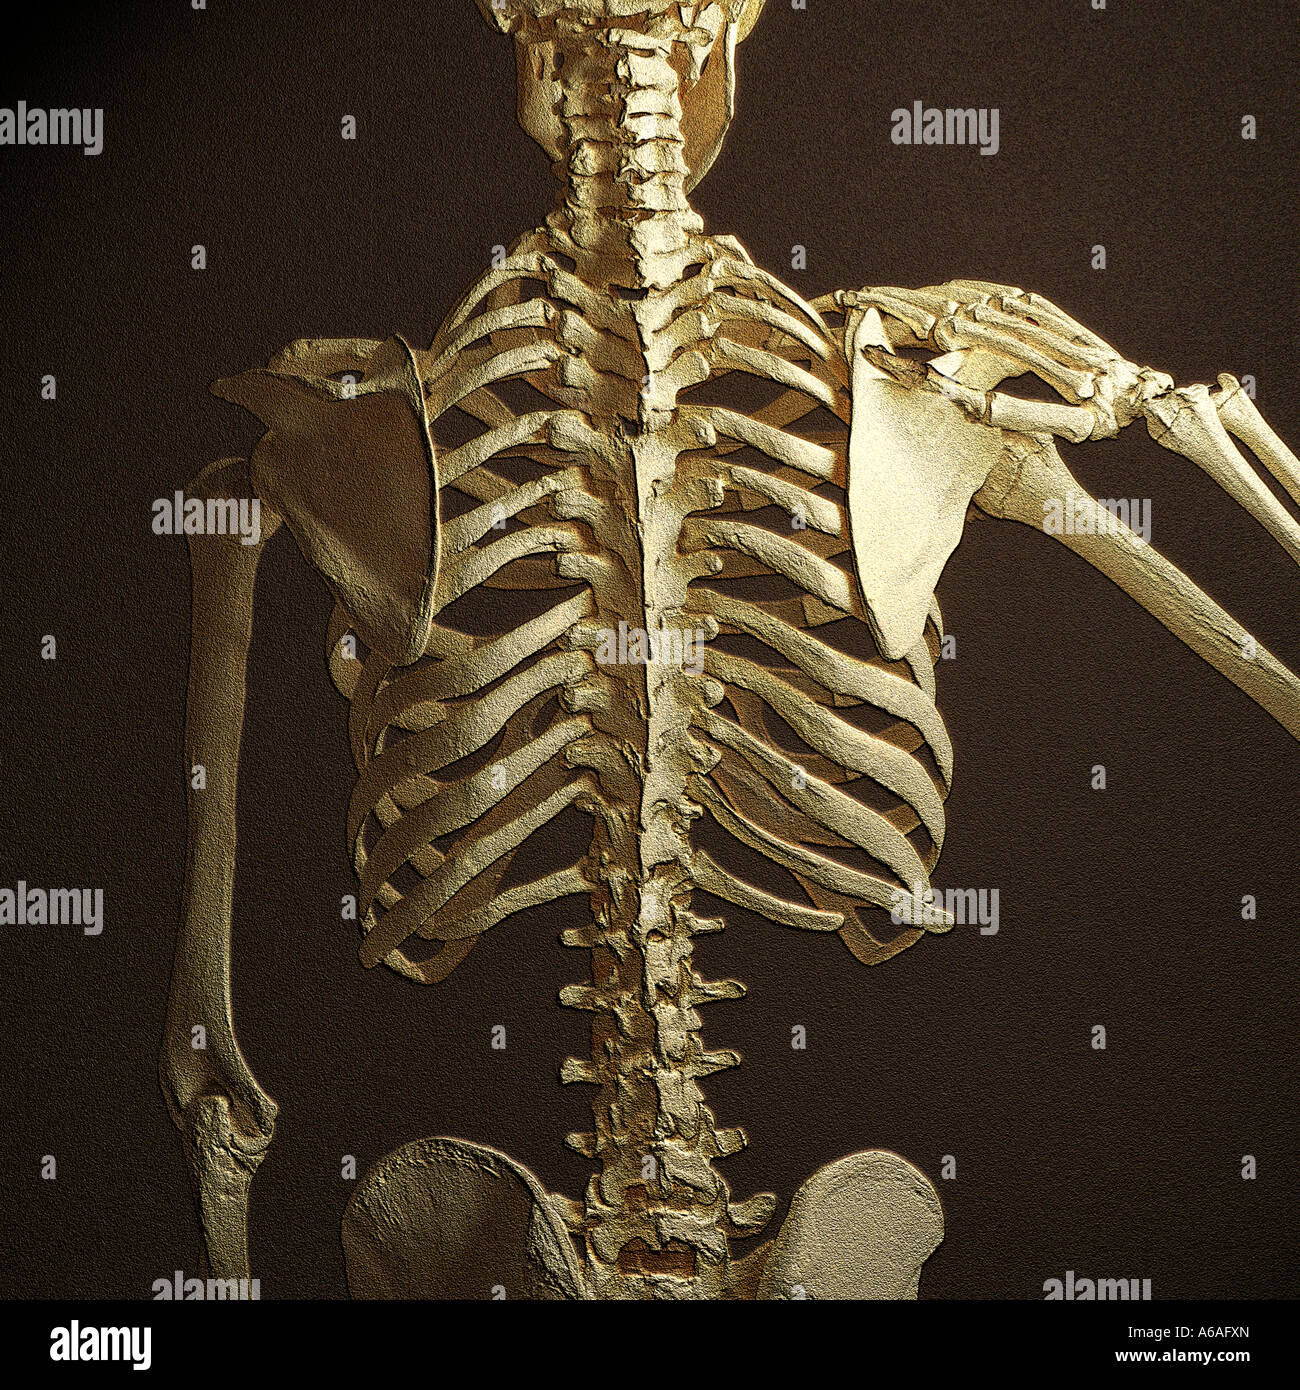 Skeleton Showing Ribs Backbone Stock Photos & Skeleton ...